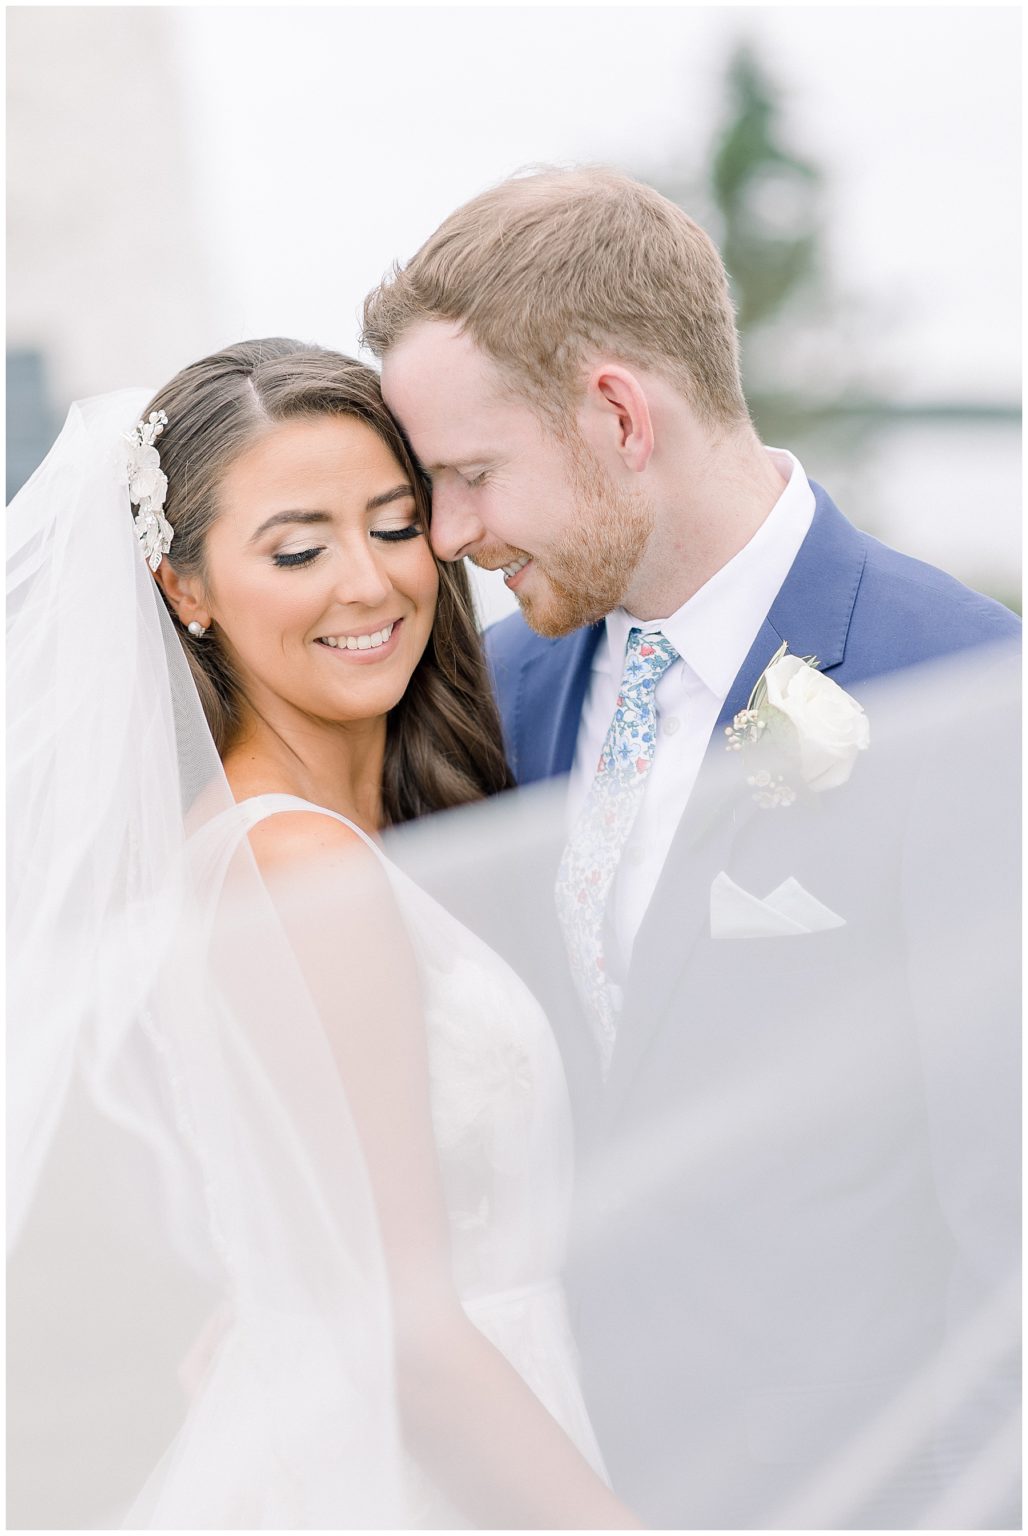 Top 10 Massachusetts Wedding Venues | Boston Wedding Photographer